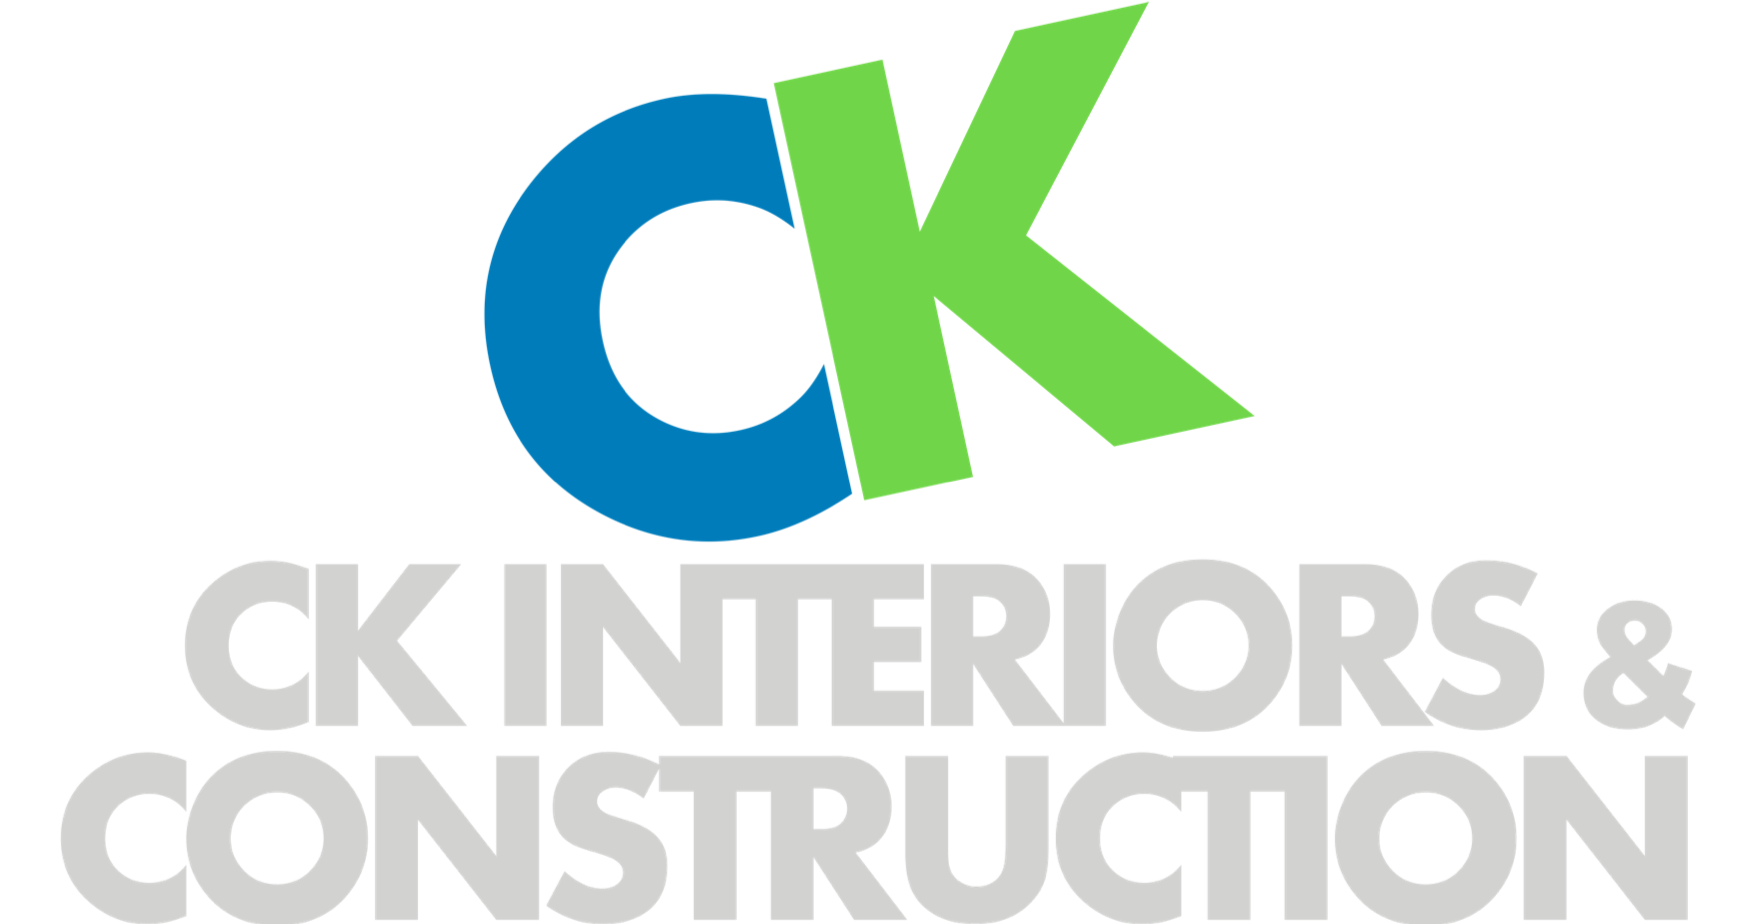 CK Interiors & Construction